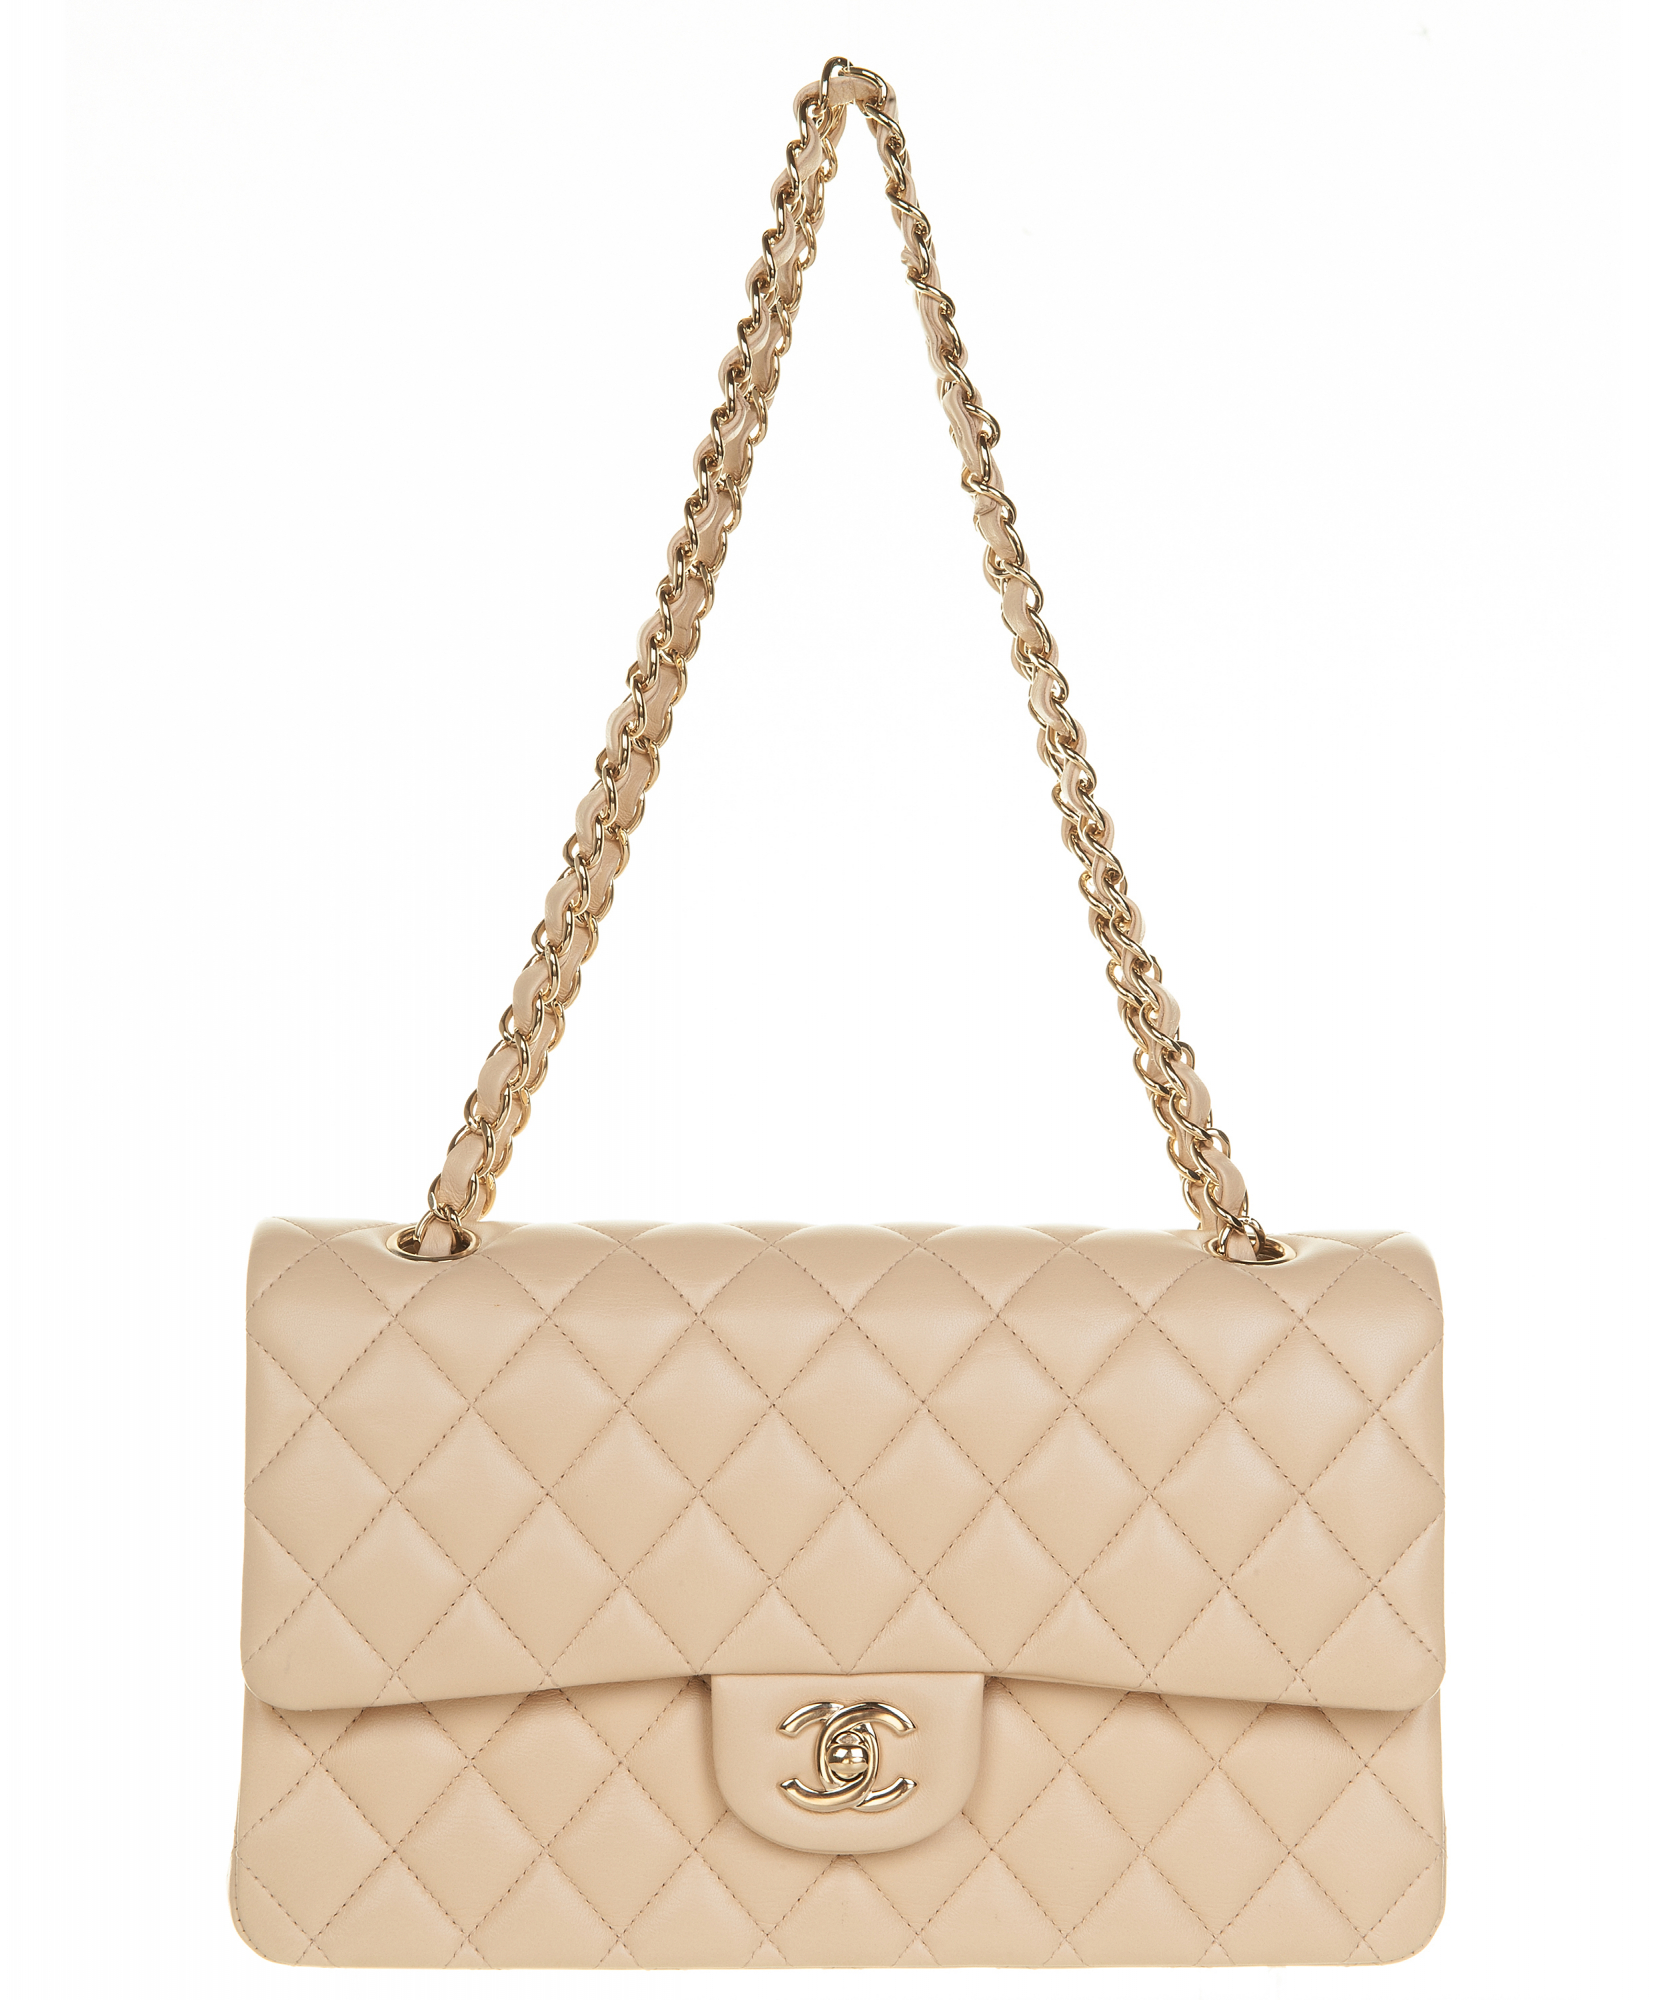 Chanel Beige Medium Double Flap Shoulder Bag - Chanel